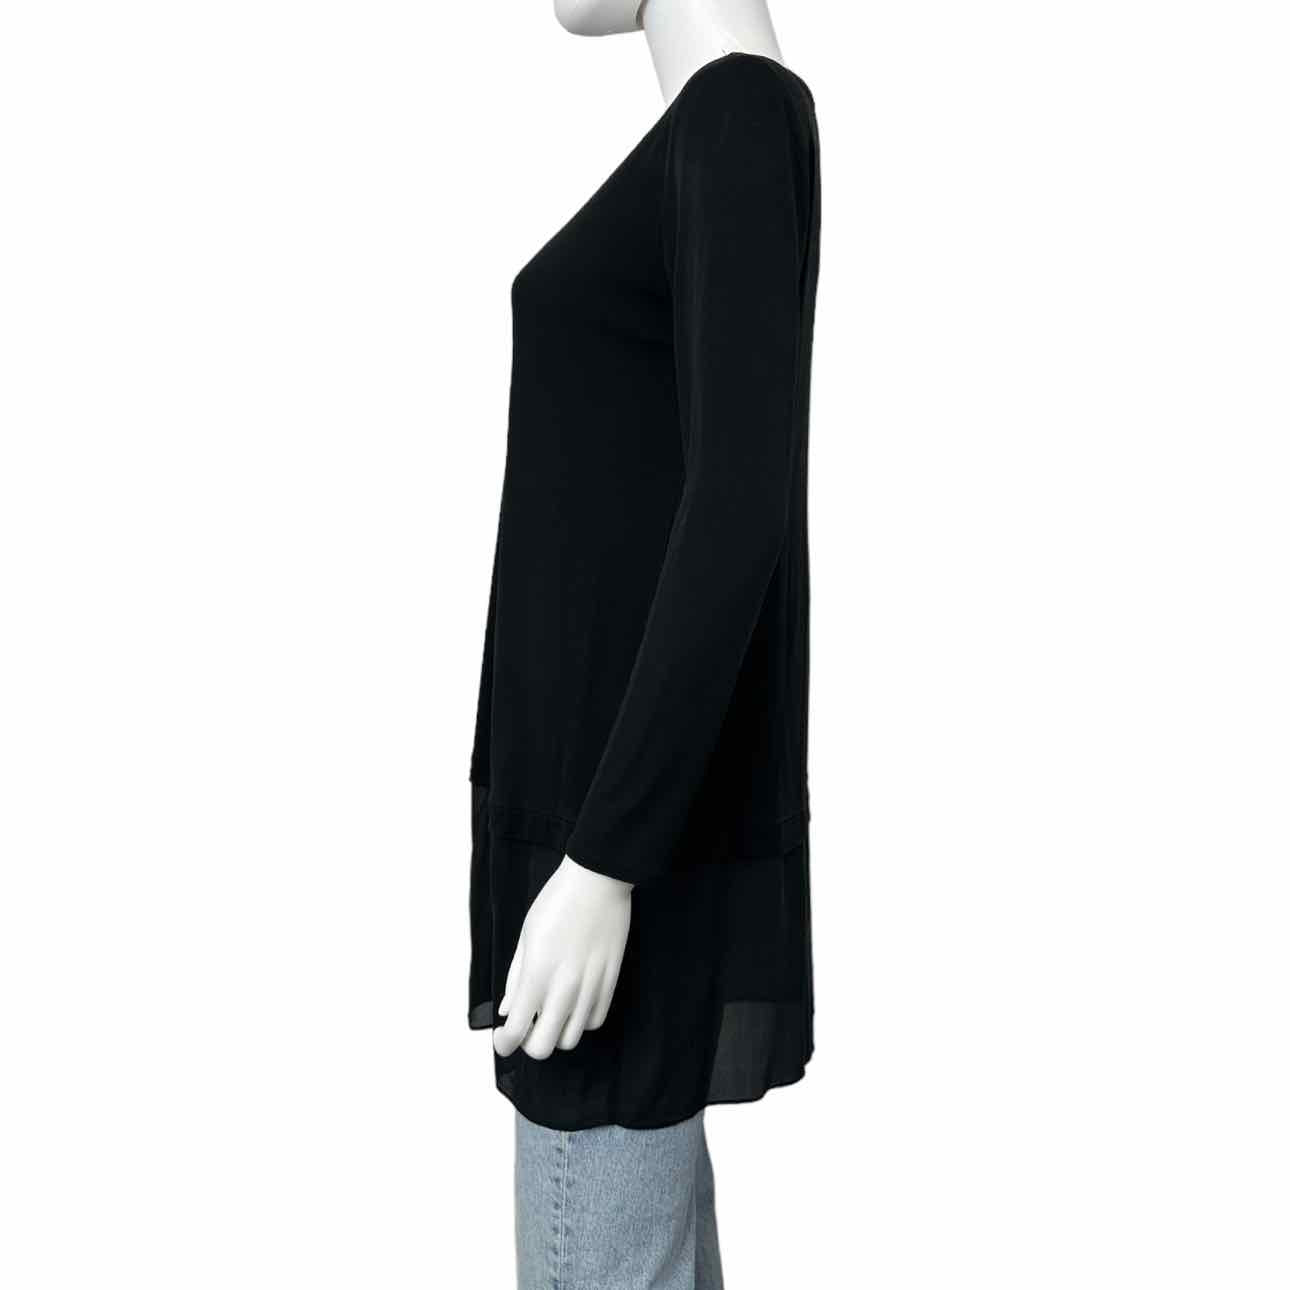 Eileen Fisher Long Silk Jersey Tunic in Black sz Large